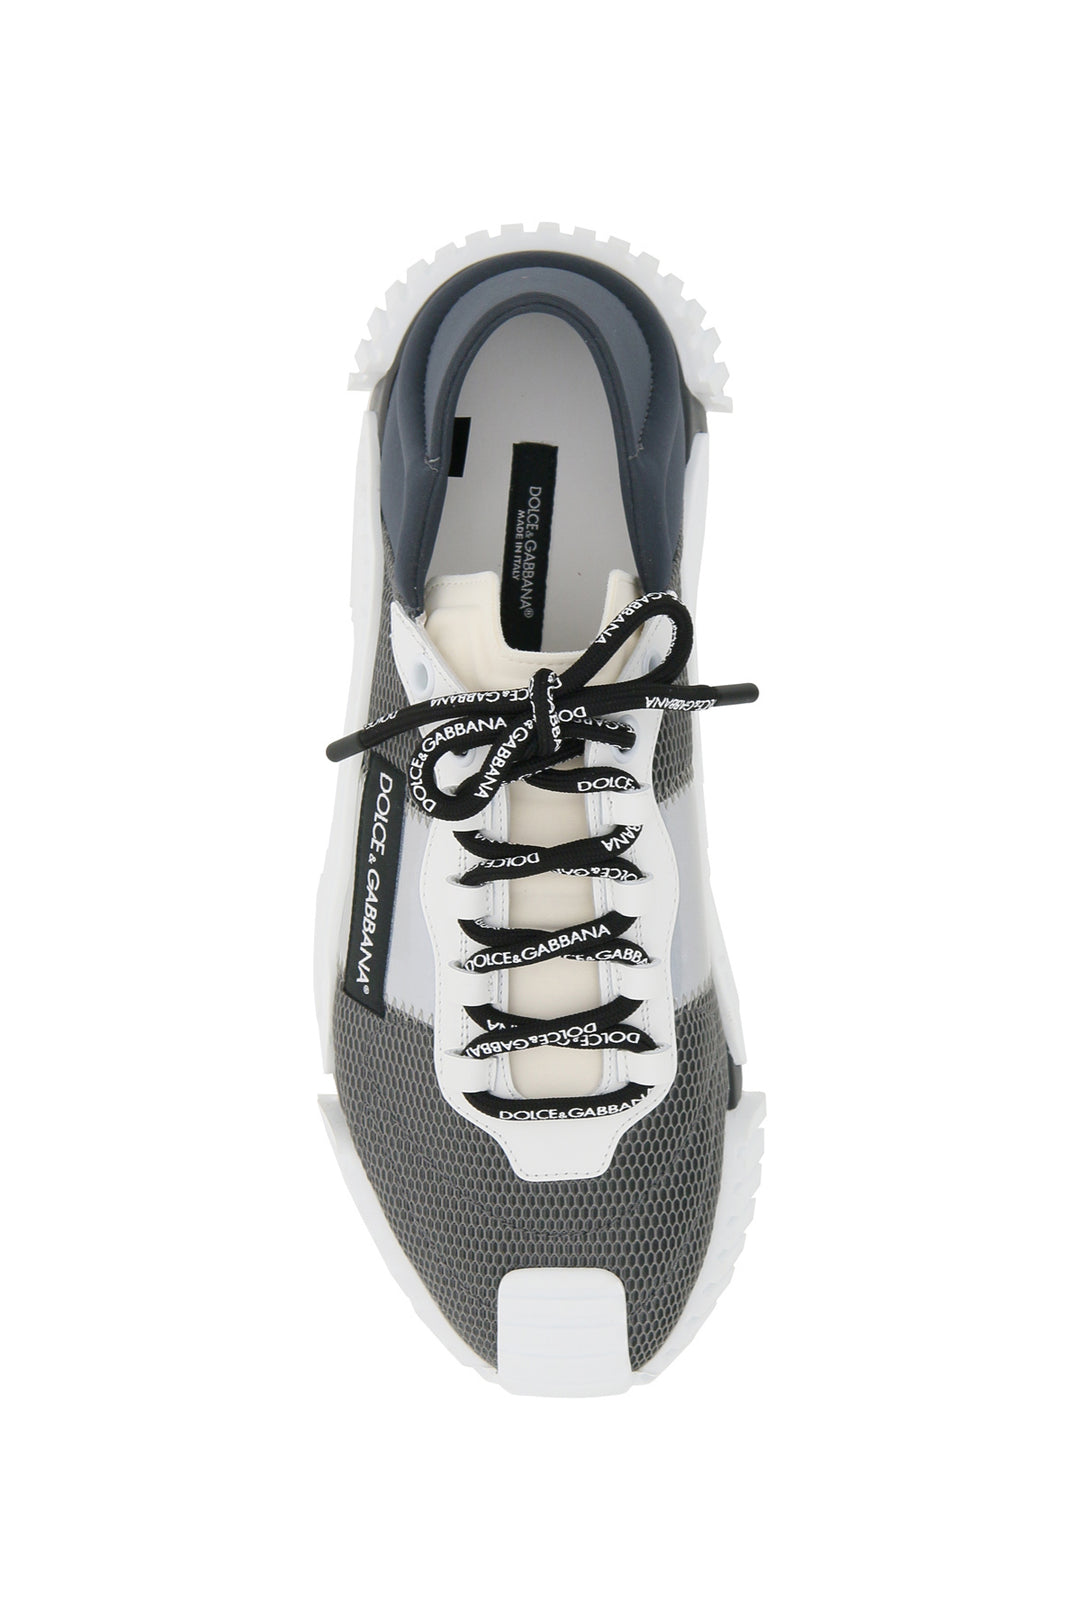 Dolce & Gabbana Ns1 Sneakers   Bianco